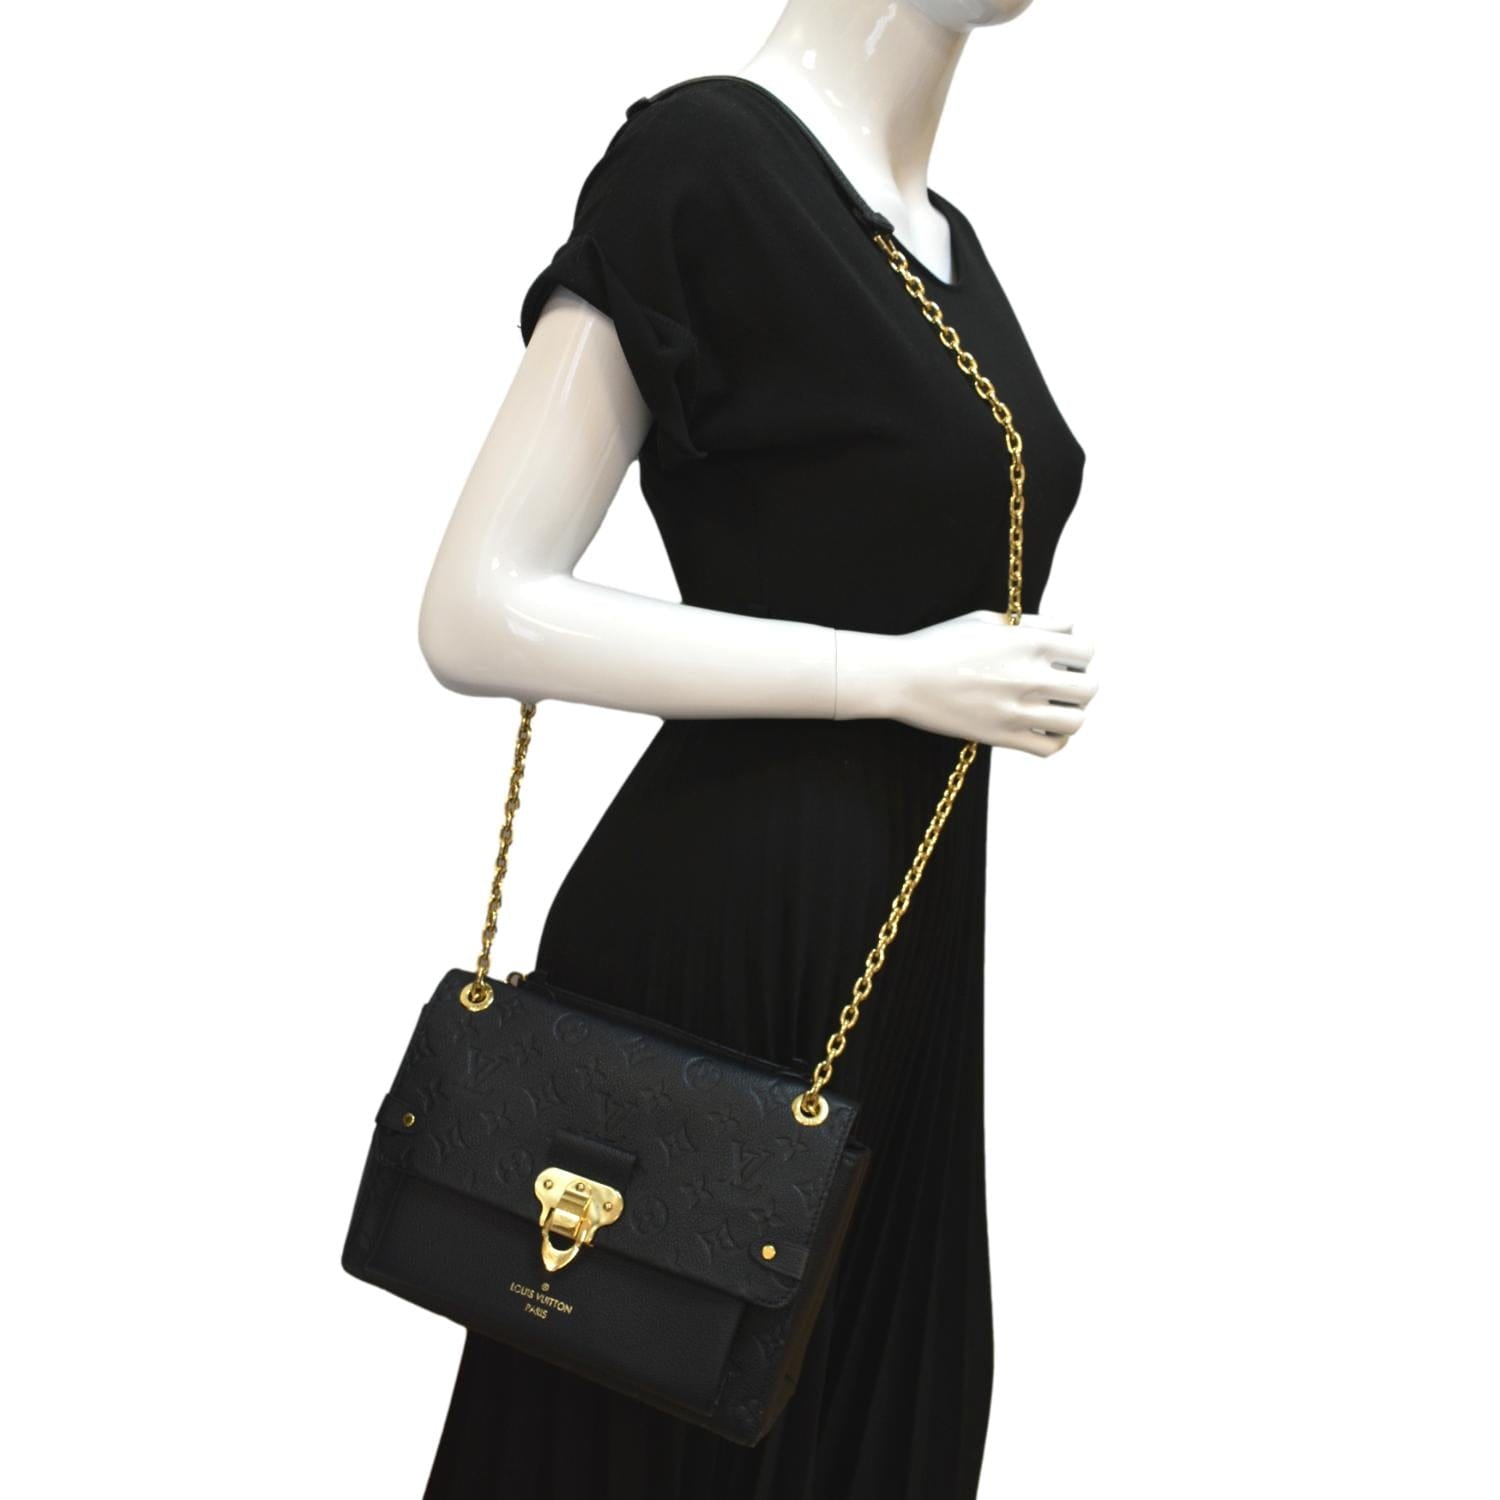 Monogram Empreinte Leather in Handbags for Women